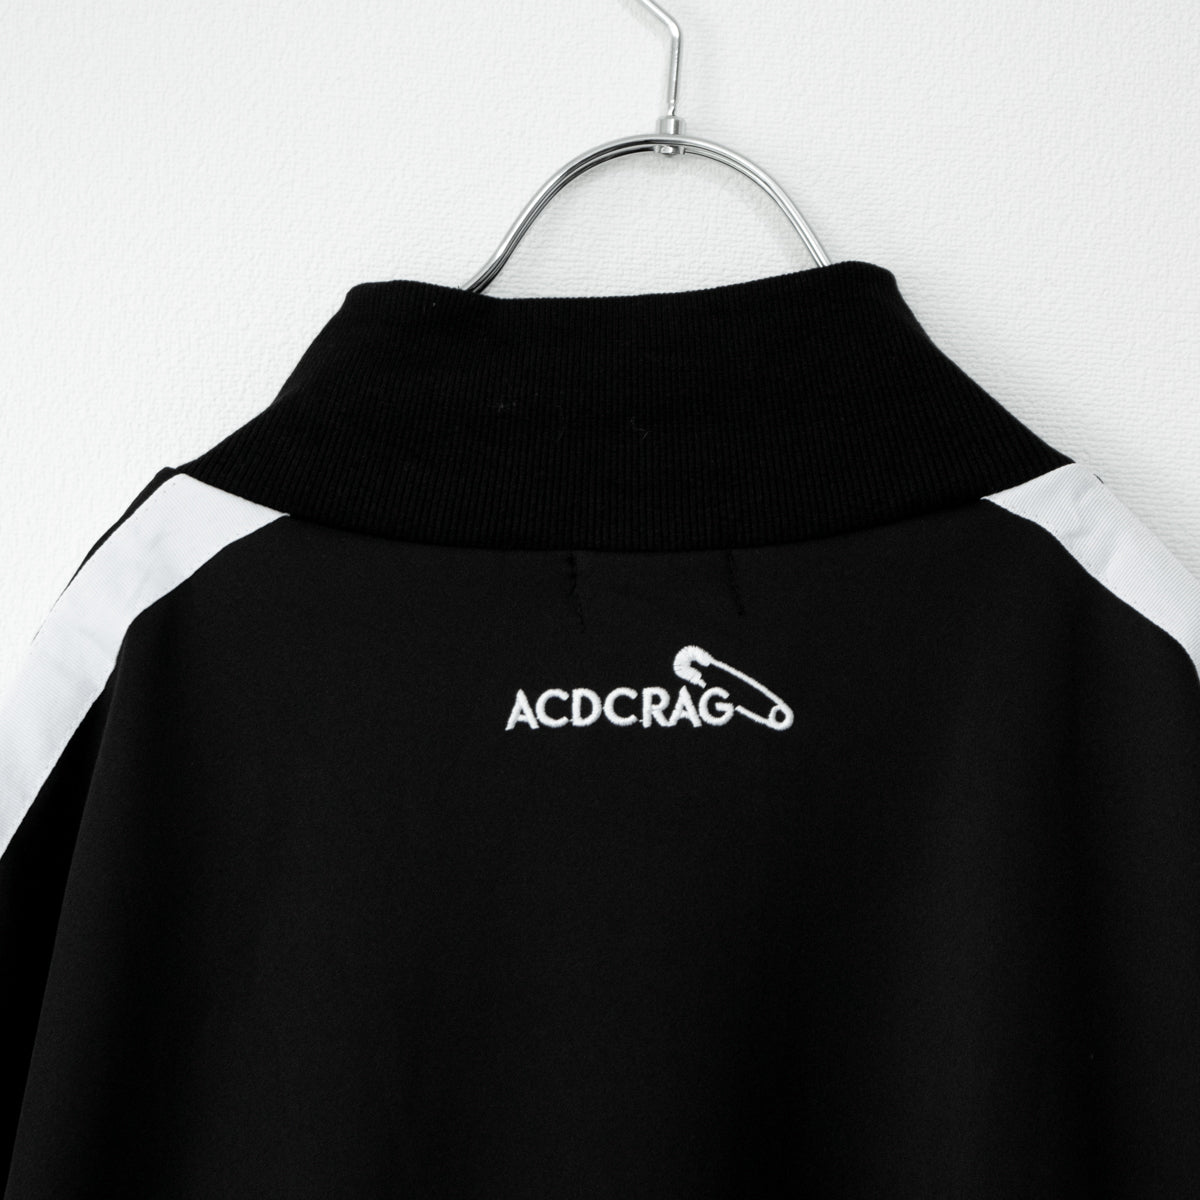 ACDC RAG Side Double Line Jersey Jacket Short Sleeve Black